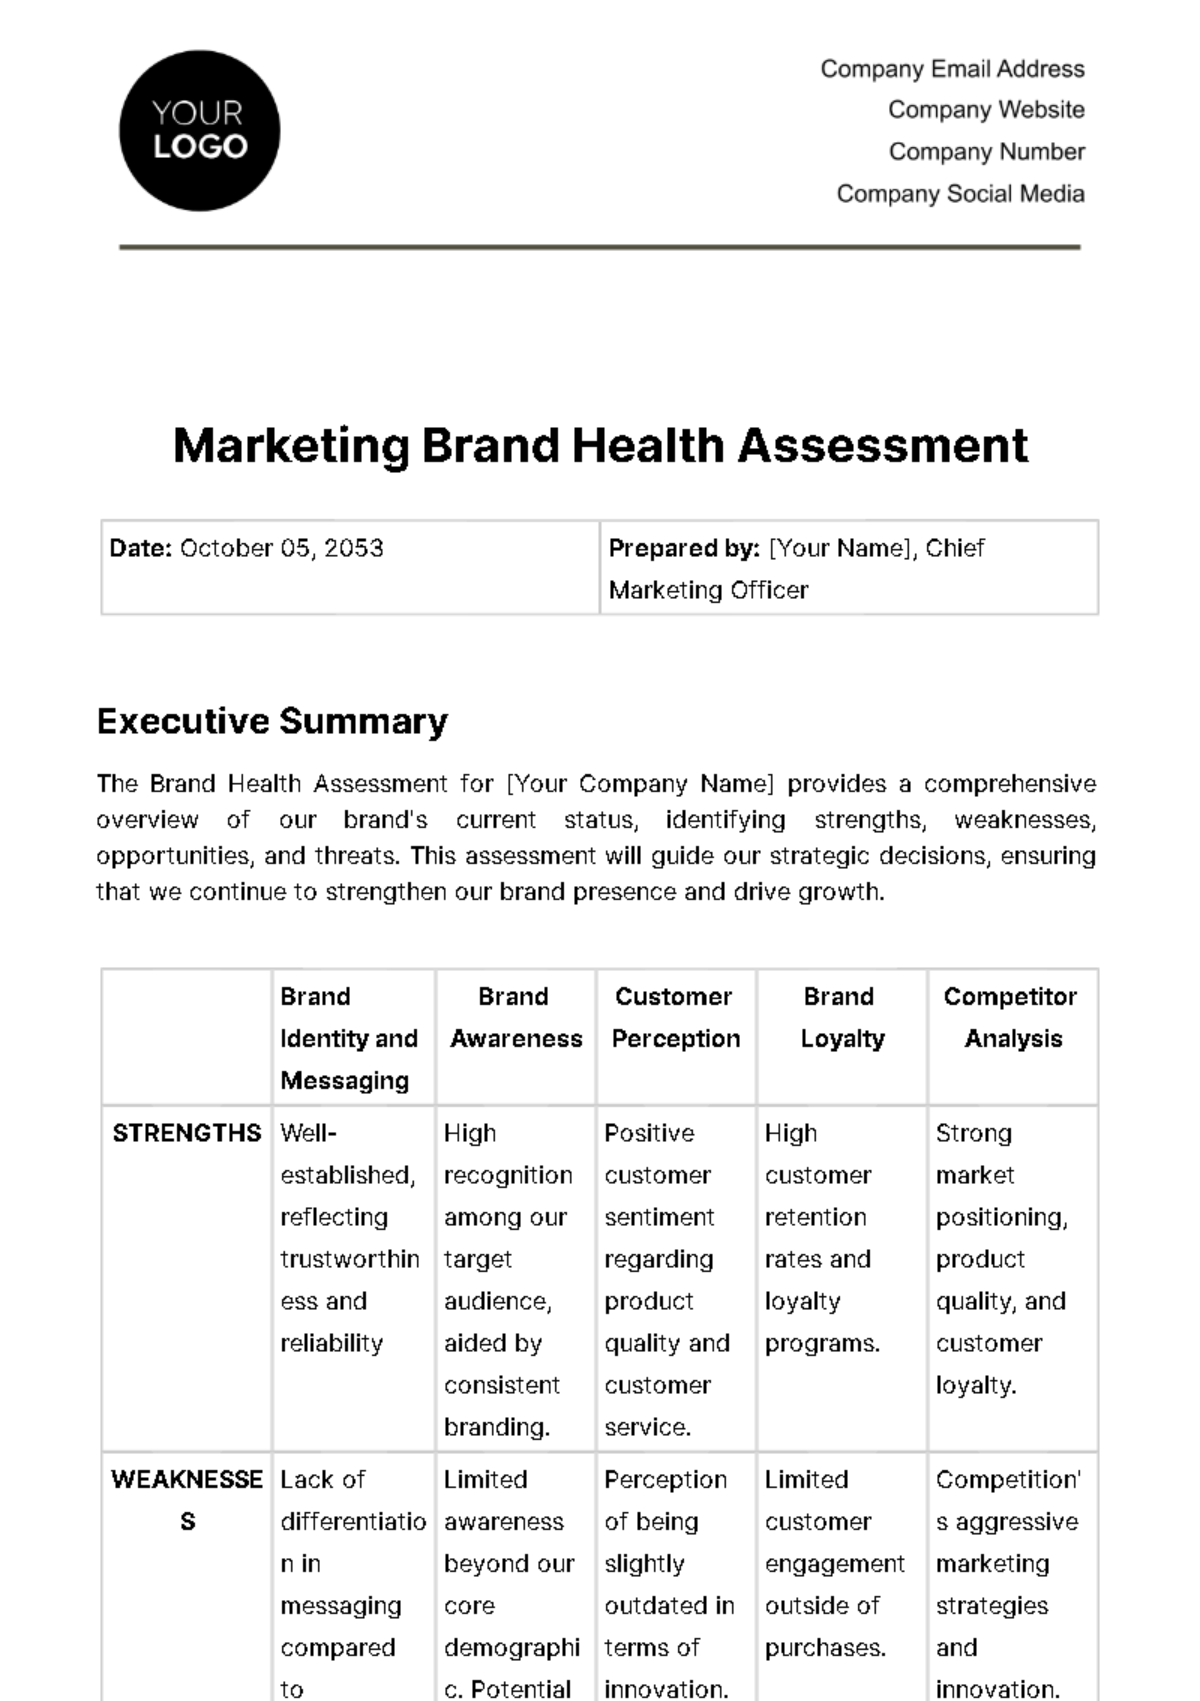 Marketing Brand Health Assessment Template